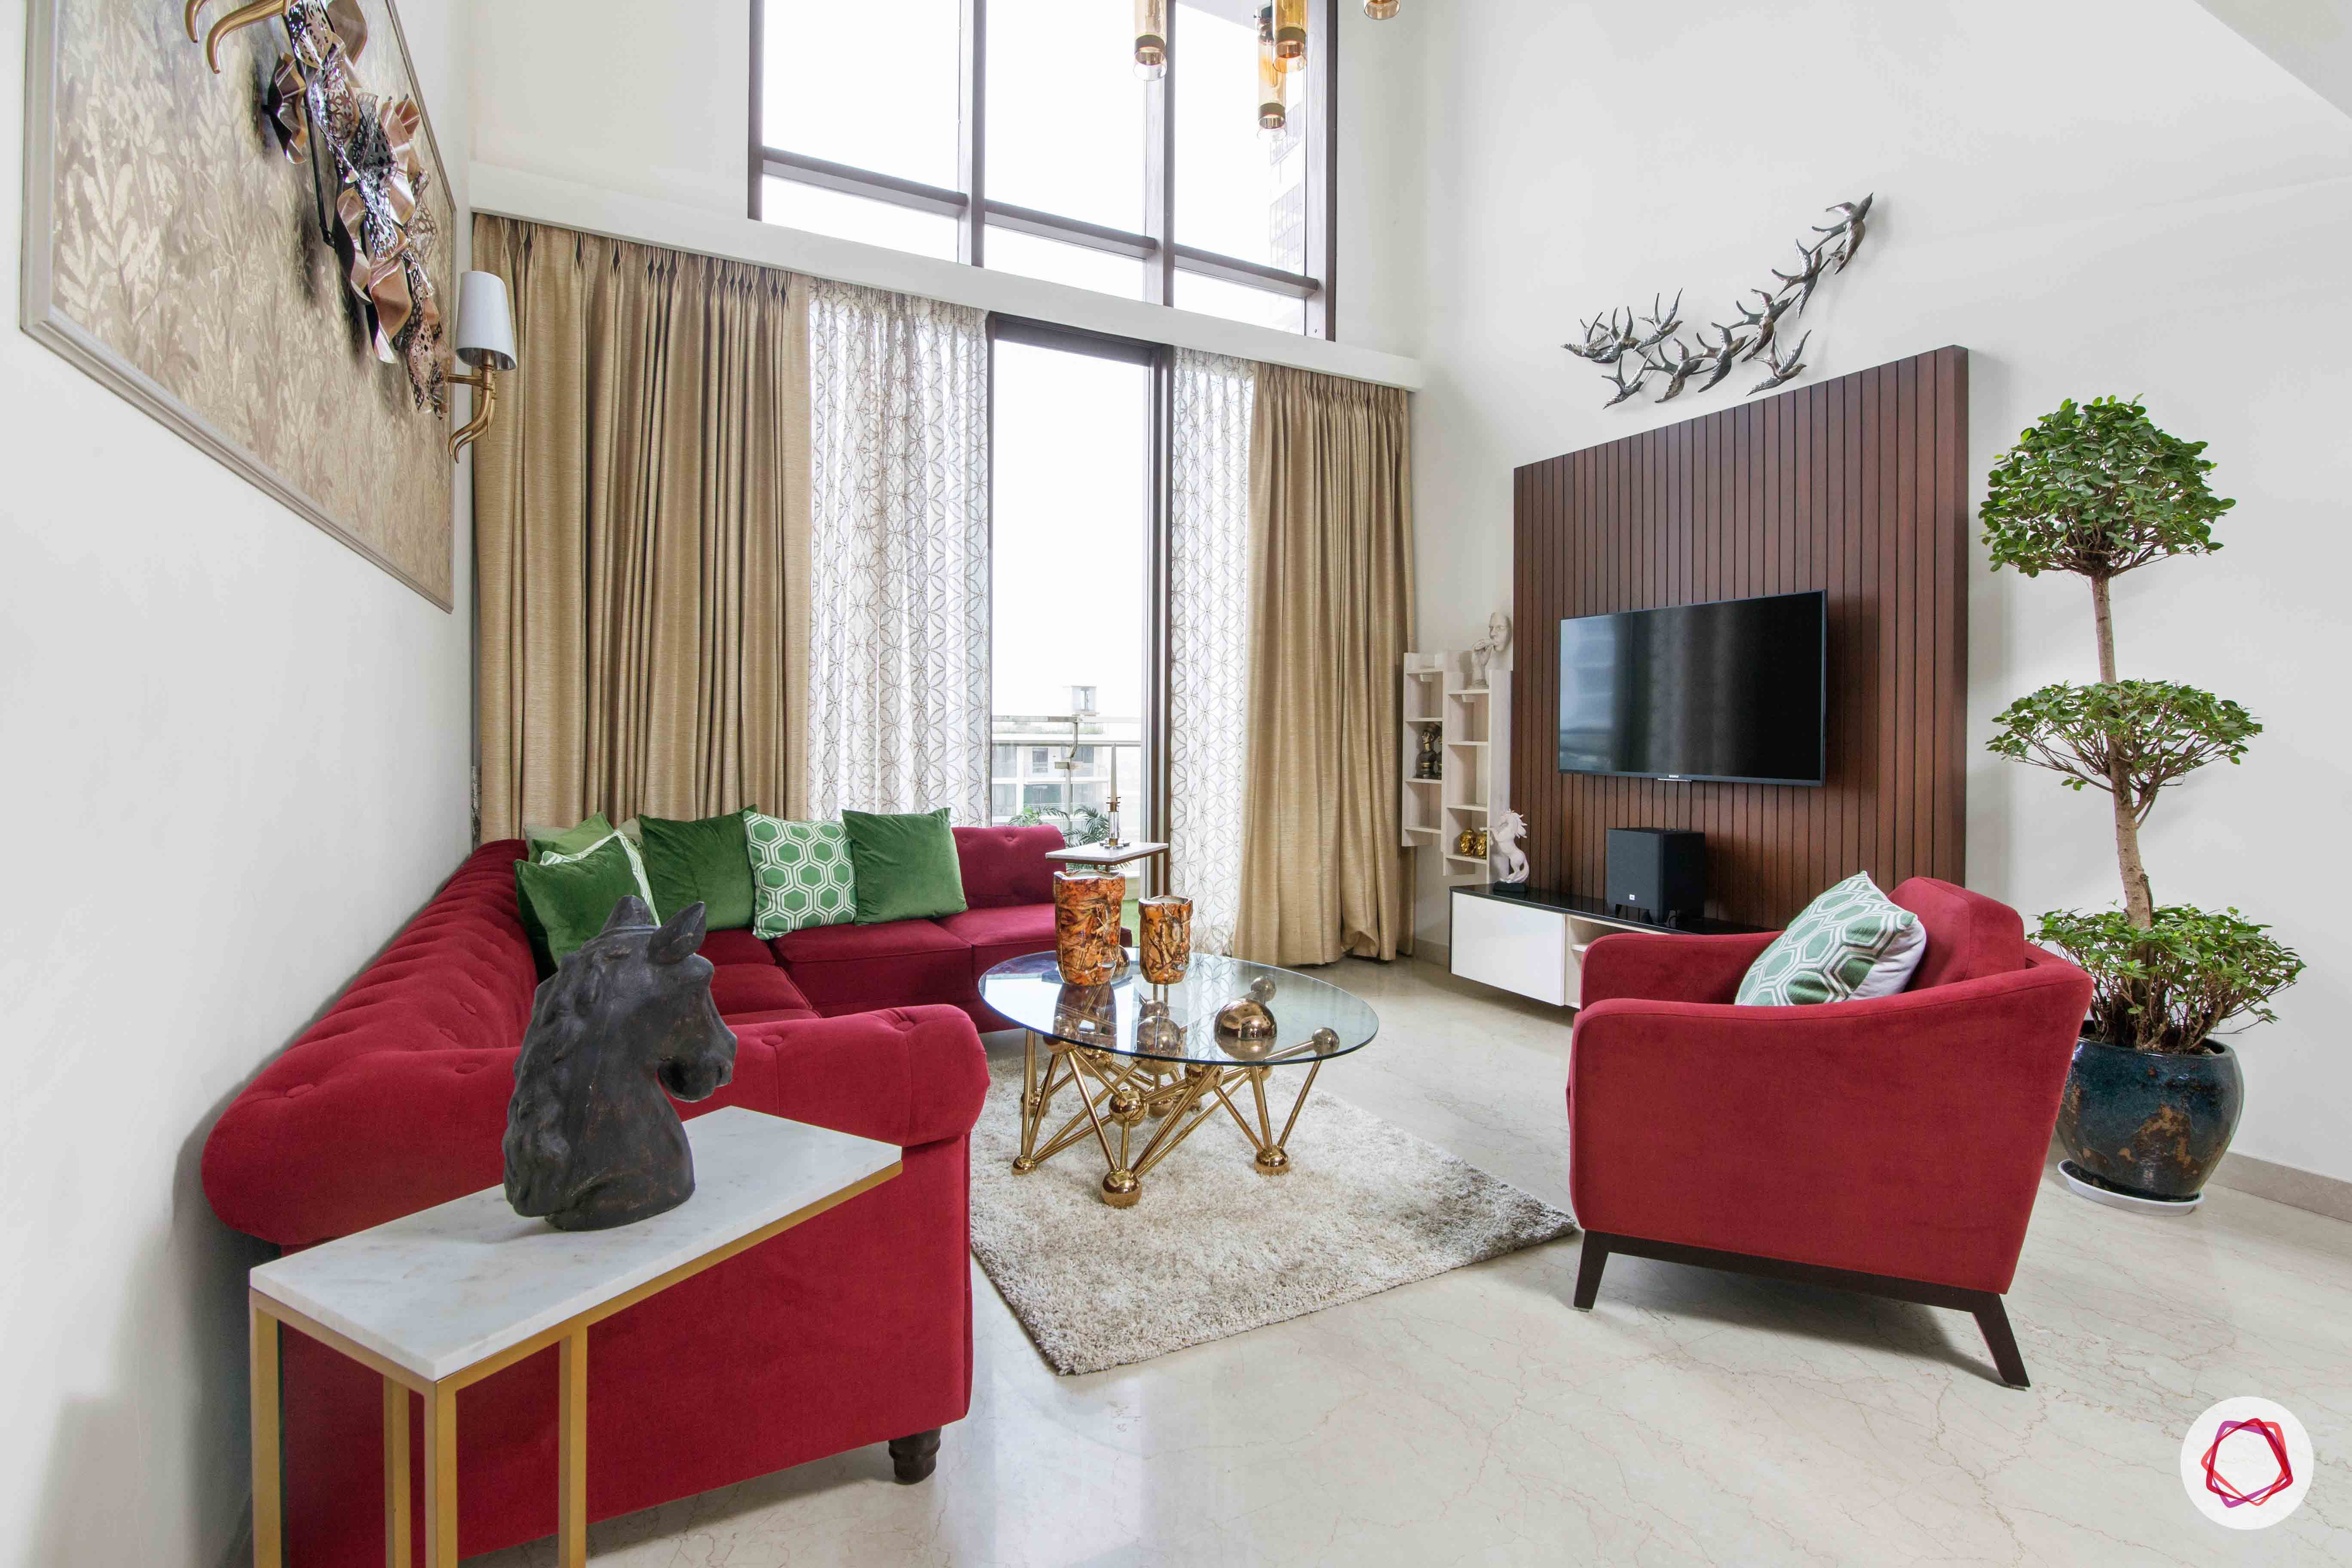 duplex house images-duplex house designs-red sofa designs-indoor plant decor ideas